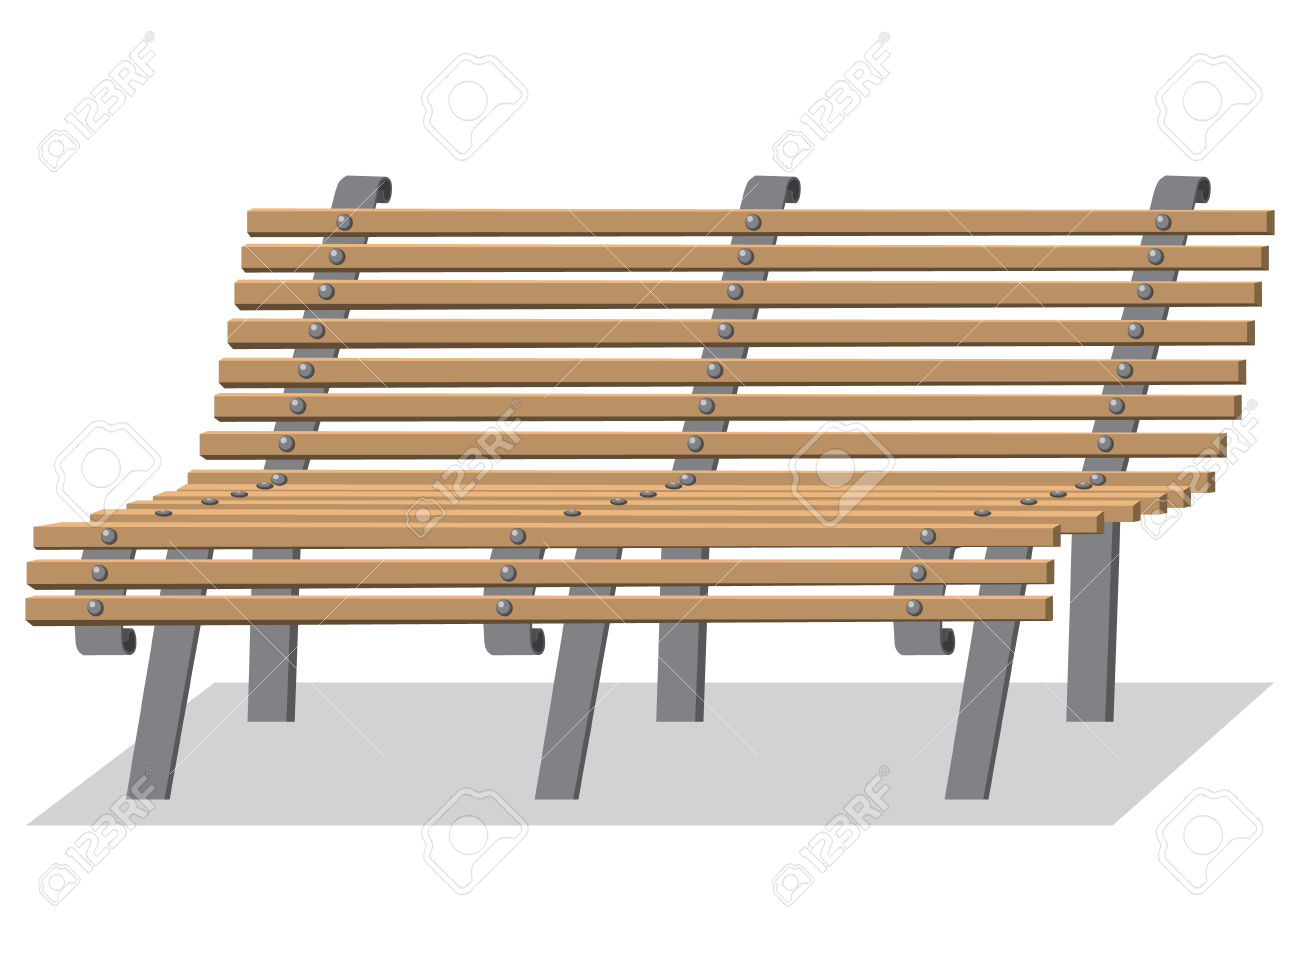 bench clipart vector